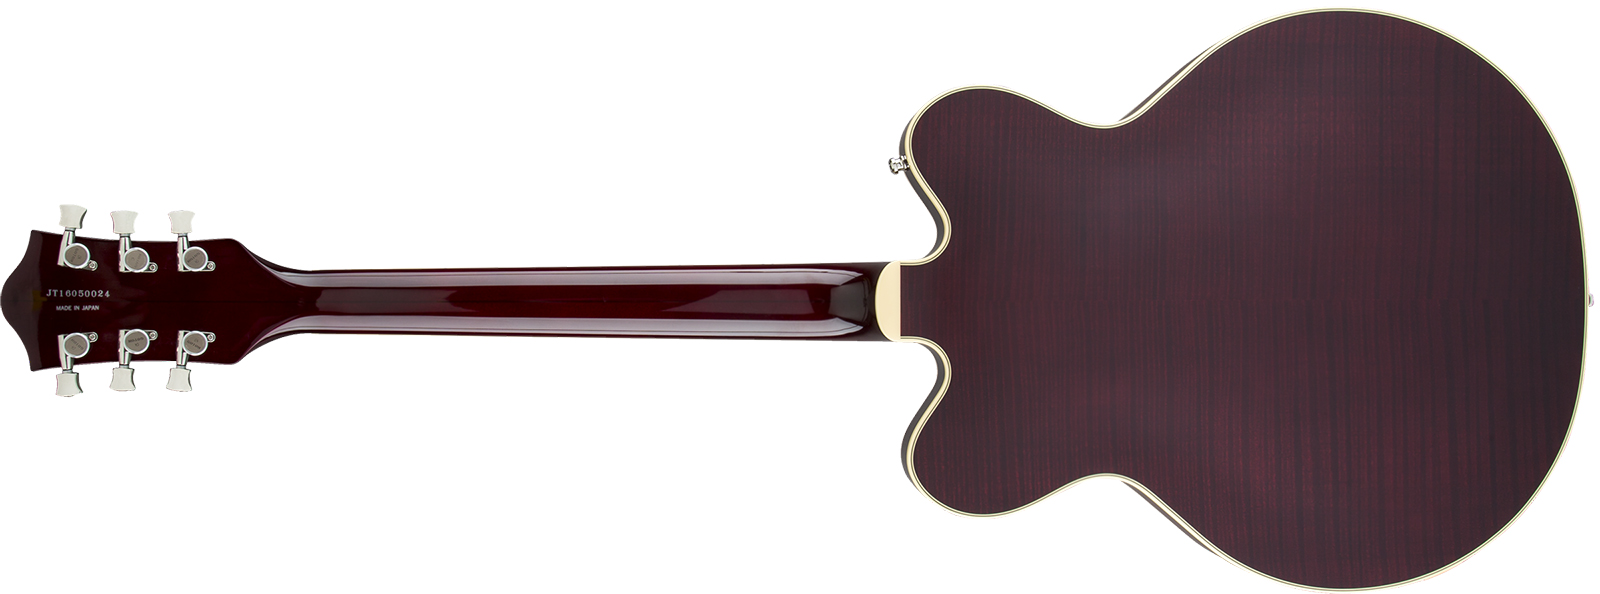 Gretsch G6609tfm Broadkaster Center Bloc Dc Players Edition Pro Jap Bigsby Eb - Dark Cherry Stain - Semi hollow elektriche gitaar - Variation 1